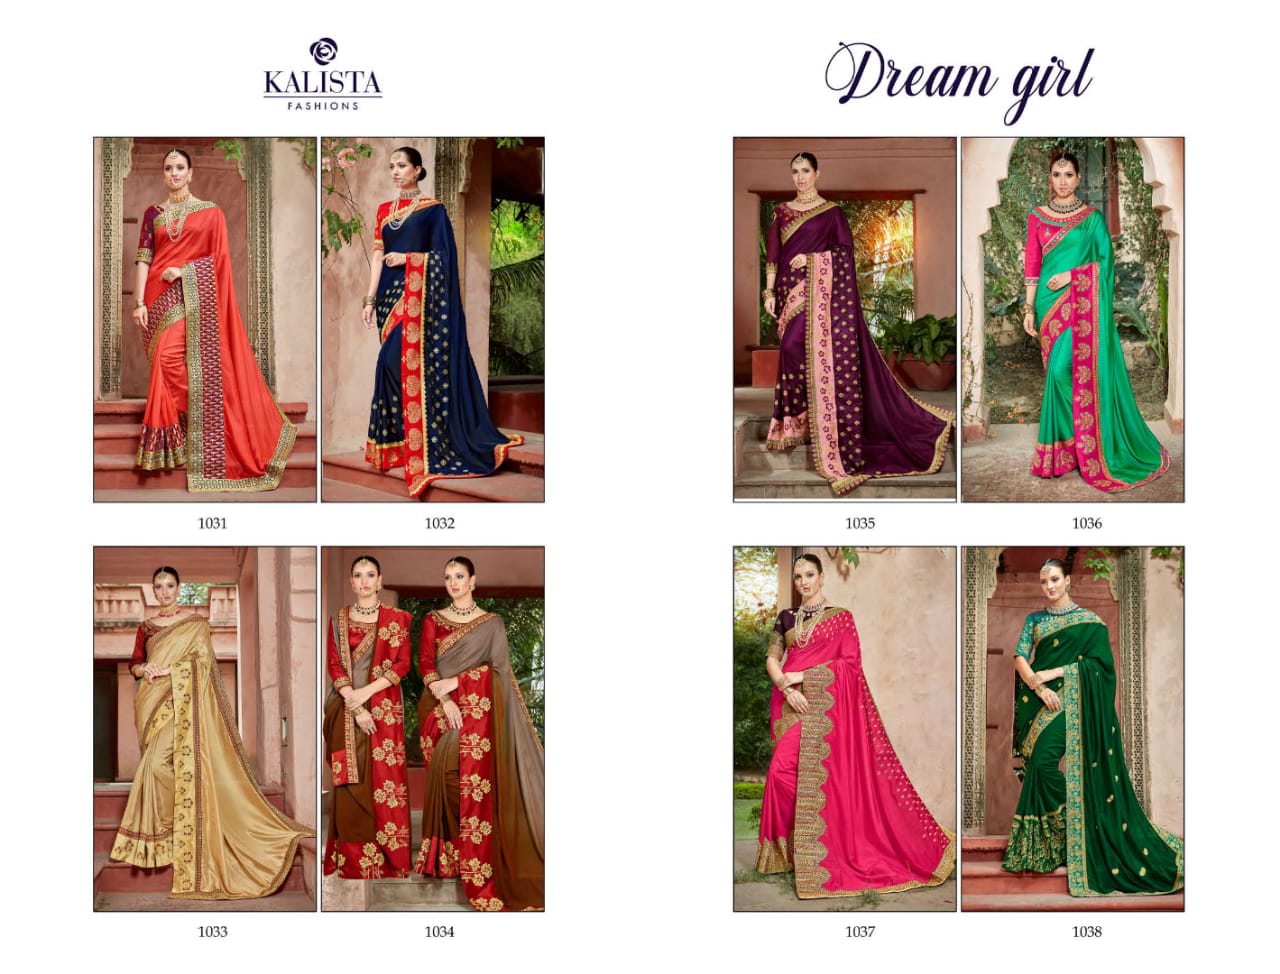 Kalista Fashion dream girl Premium collection of sarres